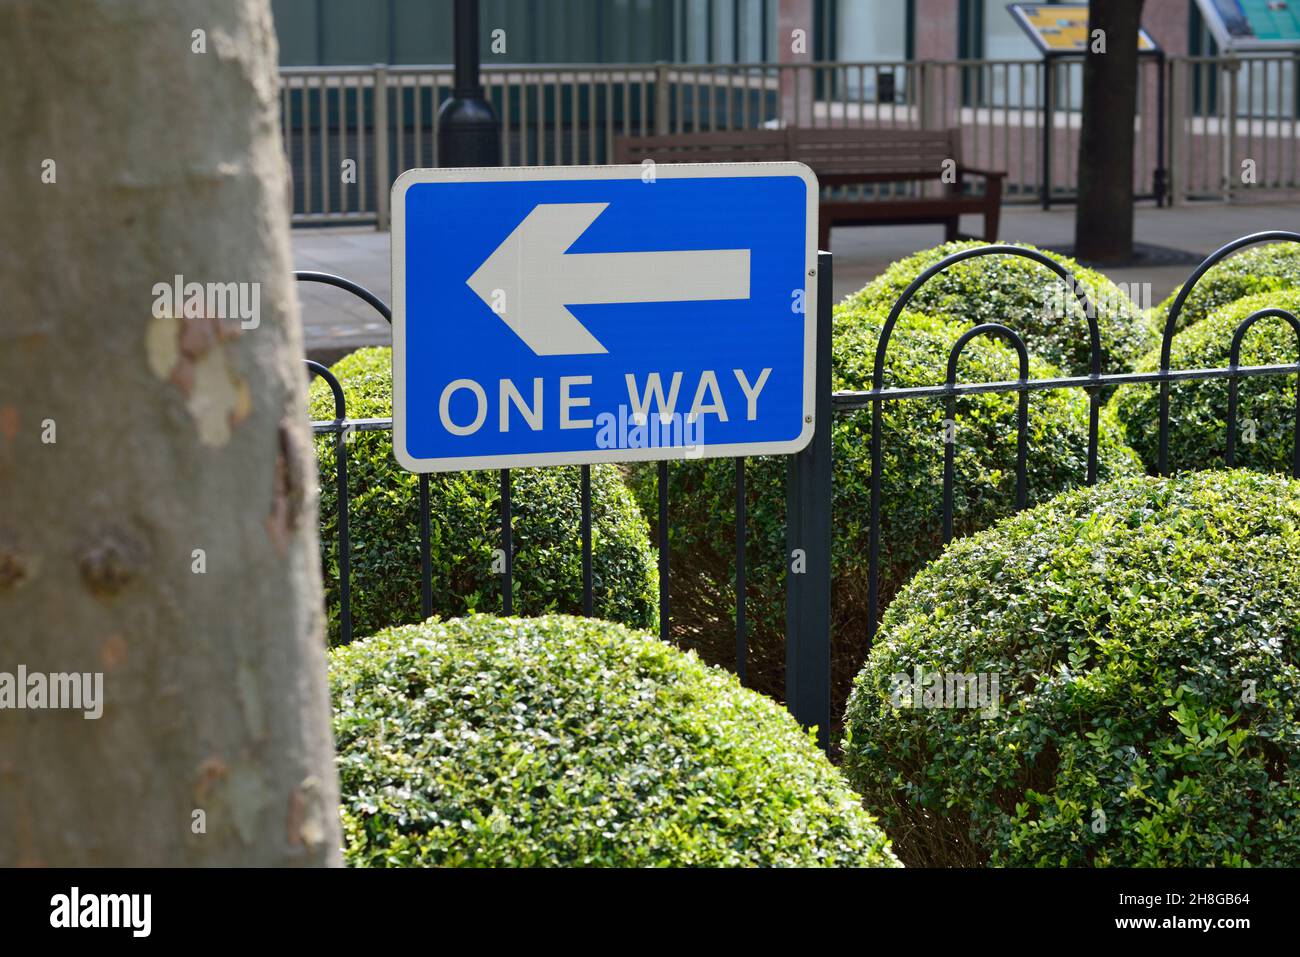 One way sign, West India Avenue, Canary Wharf, East London, United Kingdom Stock Photo